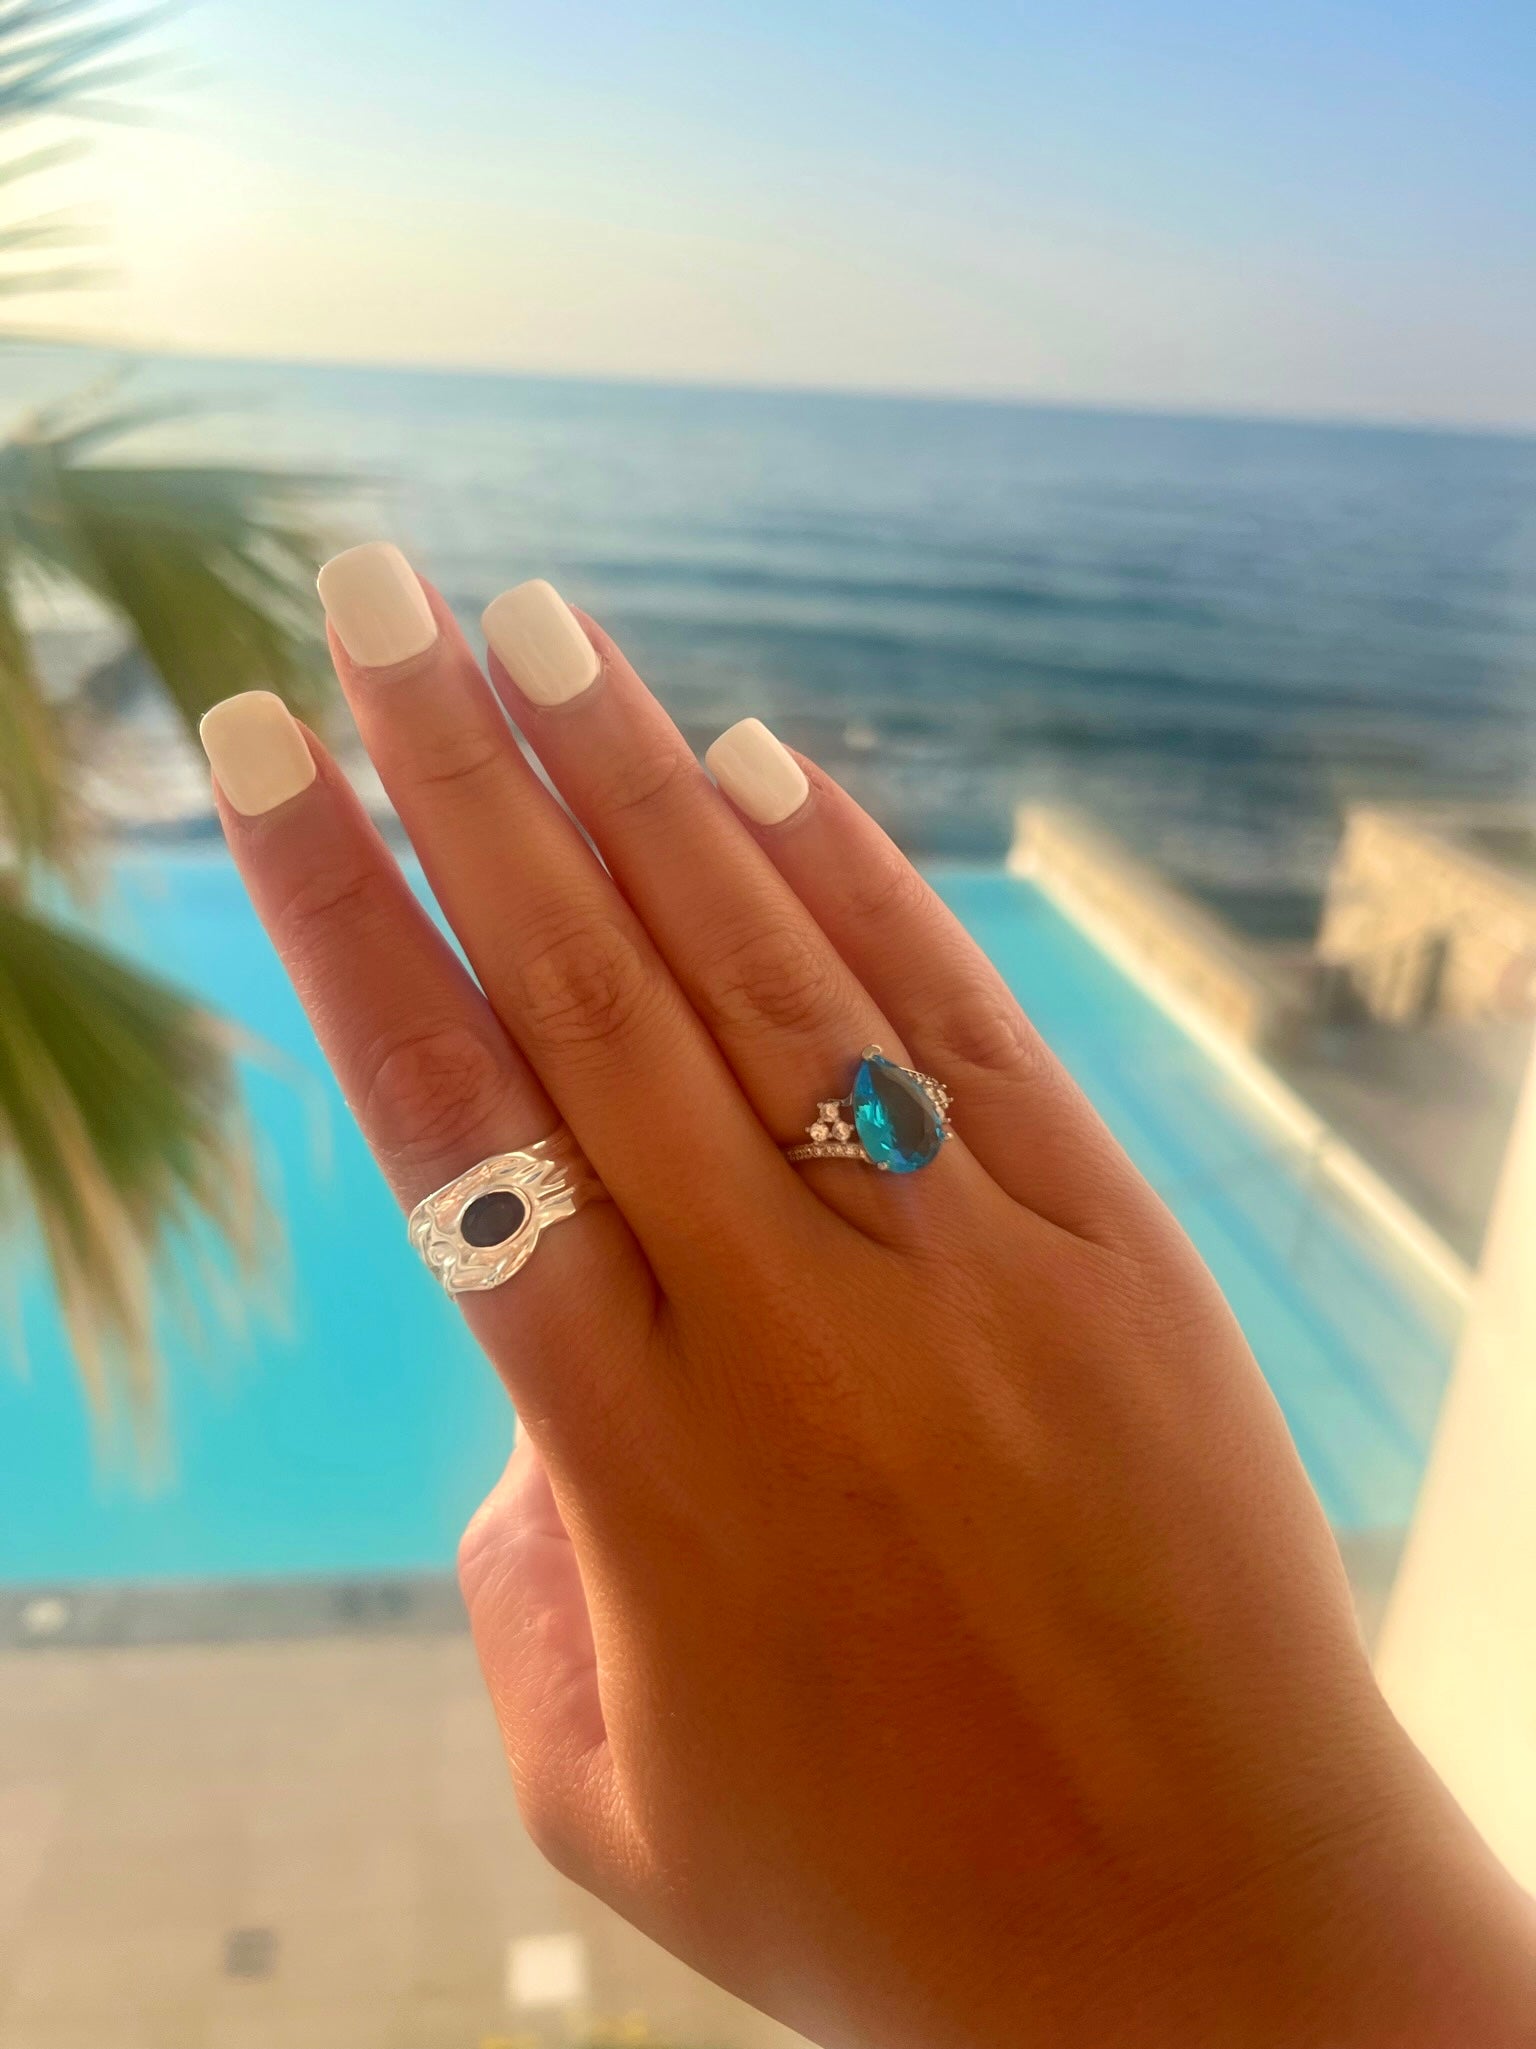 Elysia Contemporary Jewel Ring